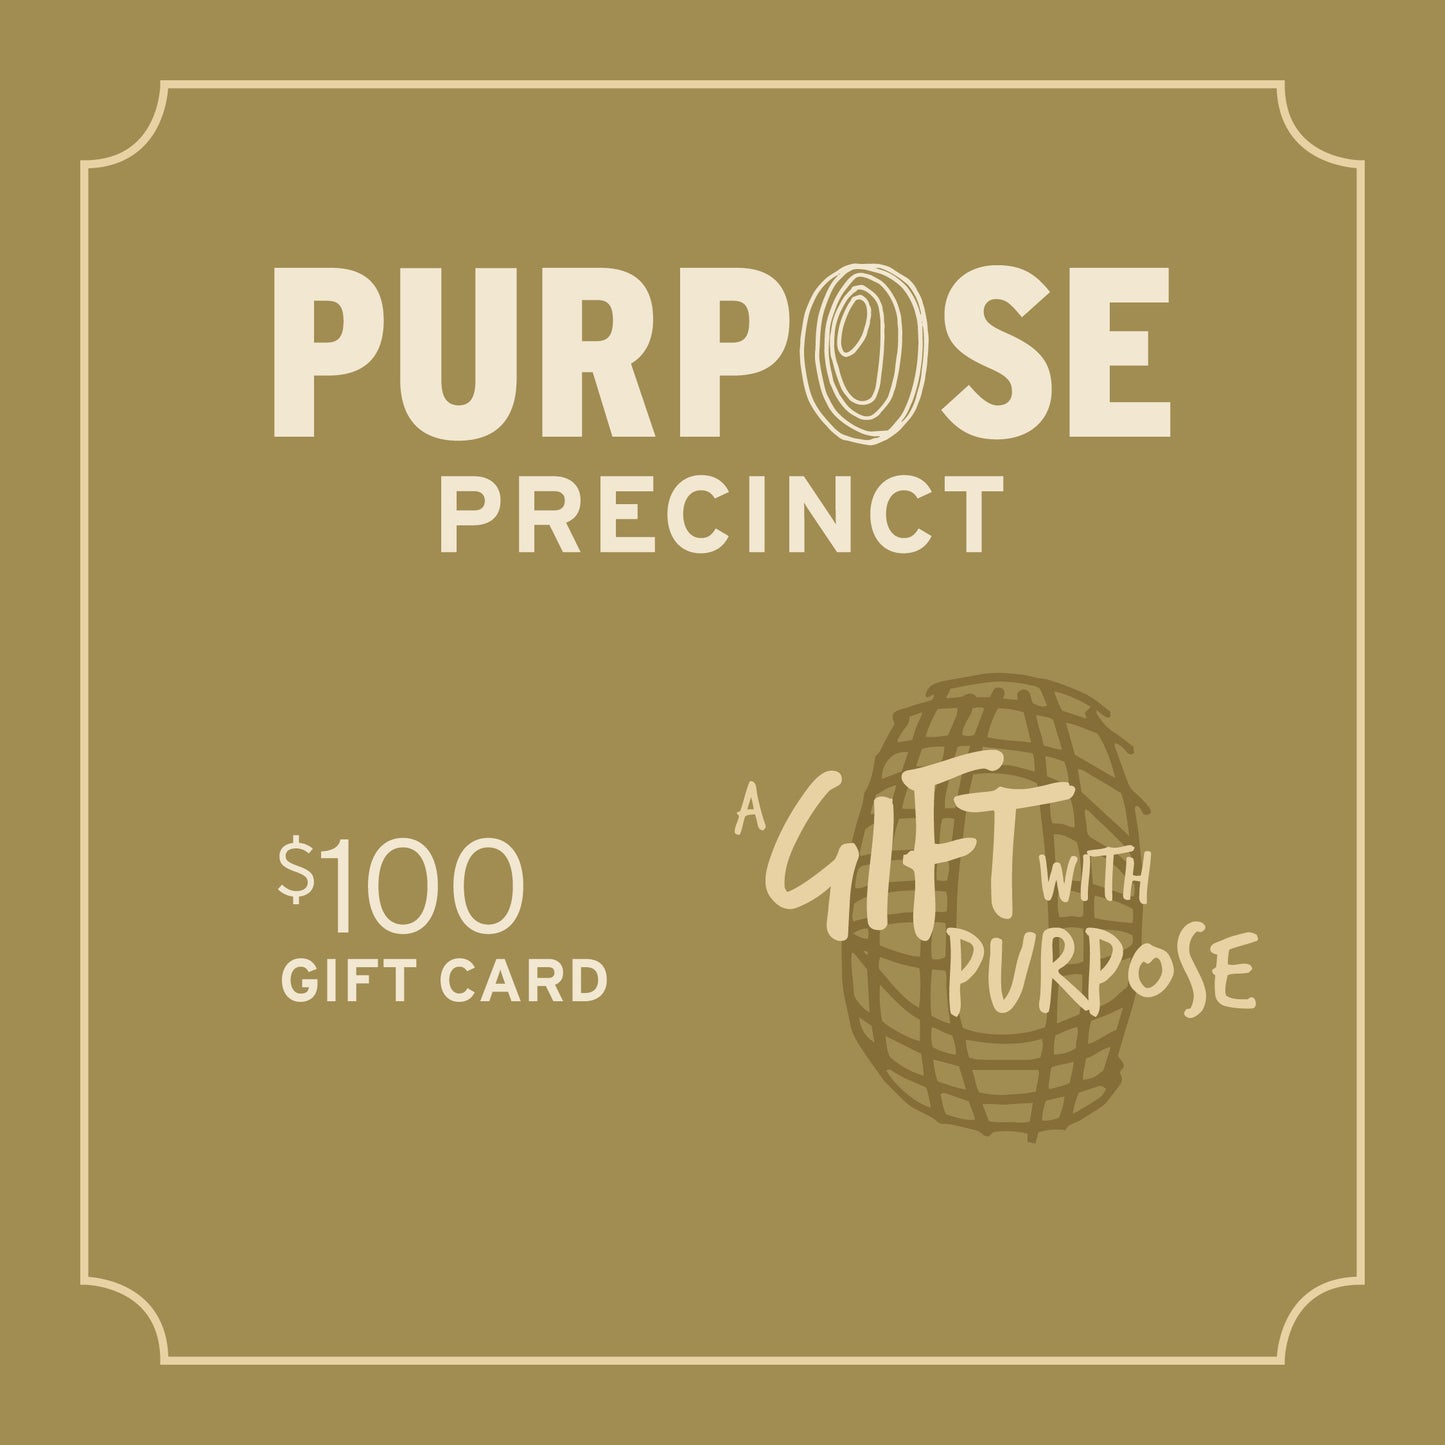 Purpose Precinct Gift Card